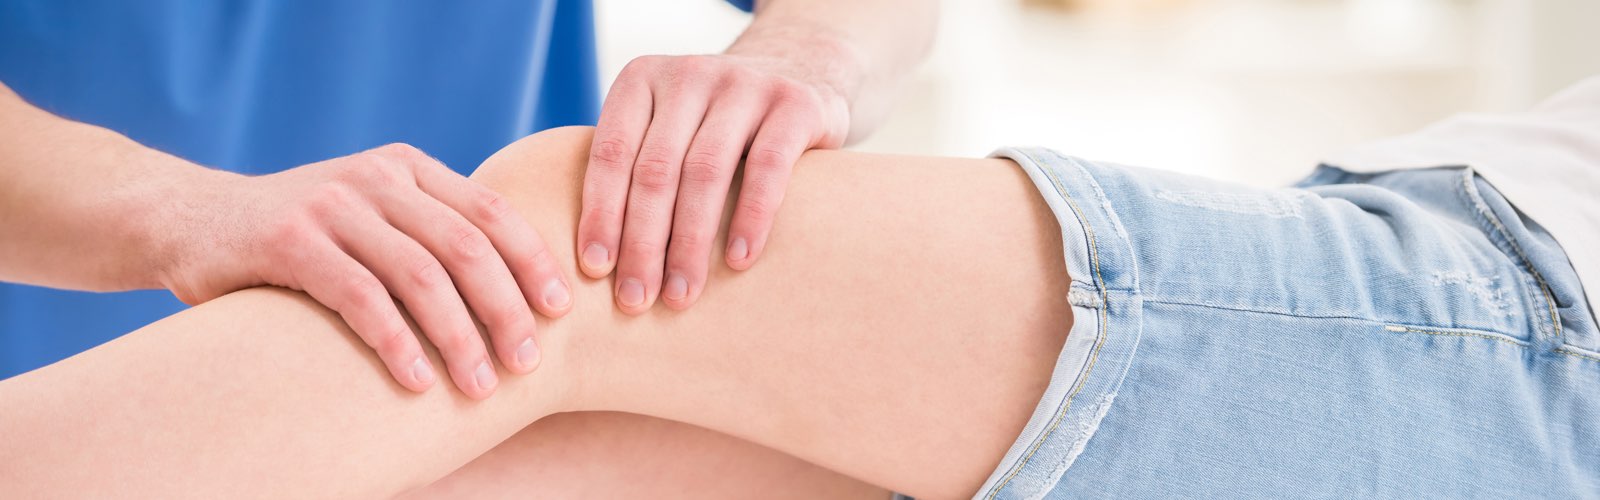 Occupational therapist massaging patient's knee